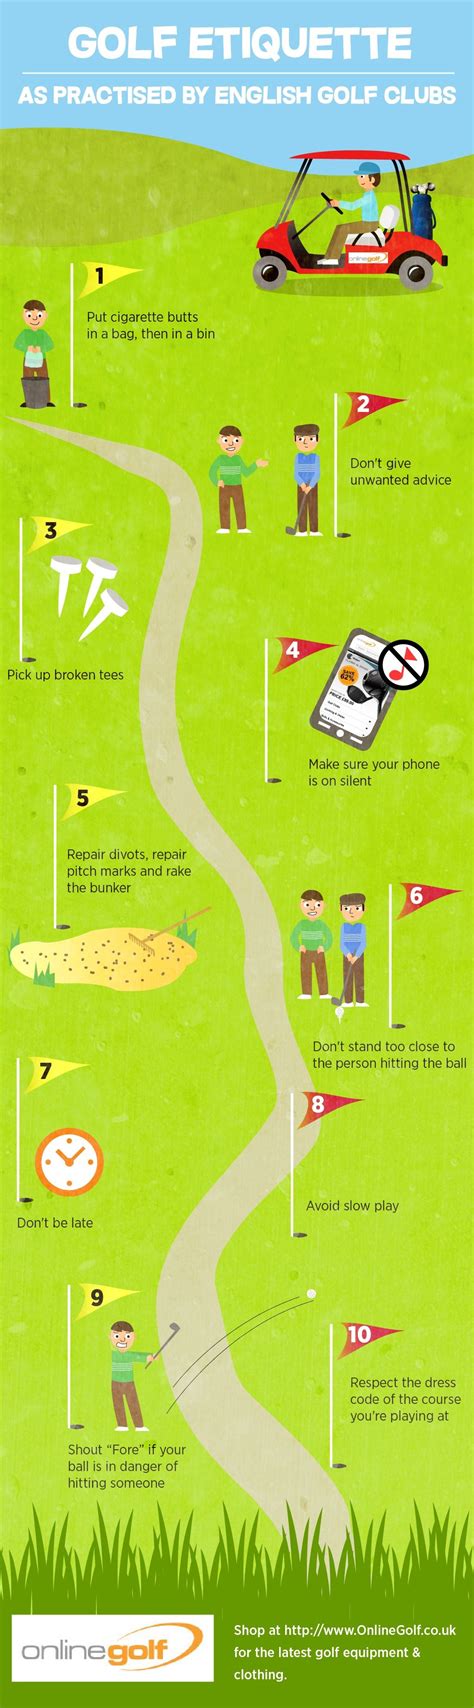 The Top 10 Tips On Good Golf Etiquette Infographic Thema Golf, Golf Swing Mechanics, Golf ...